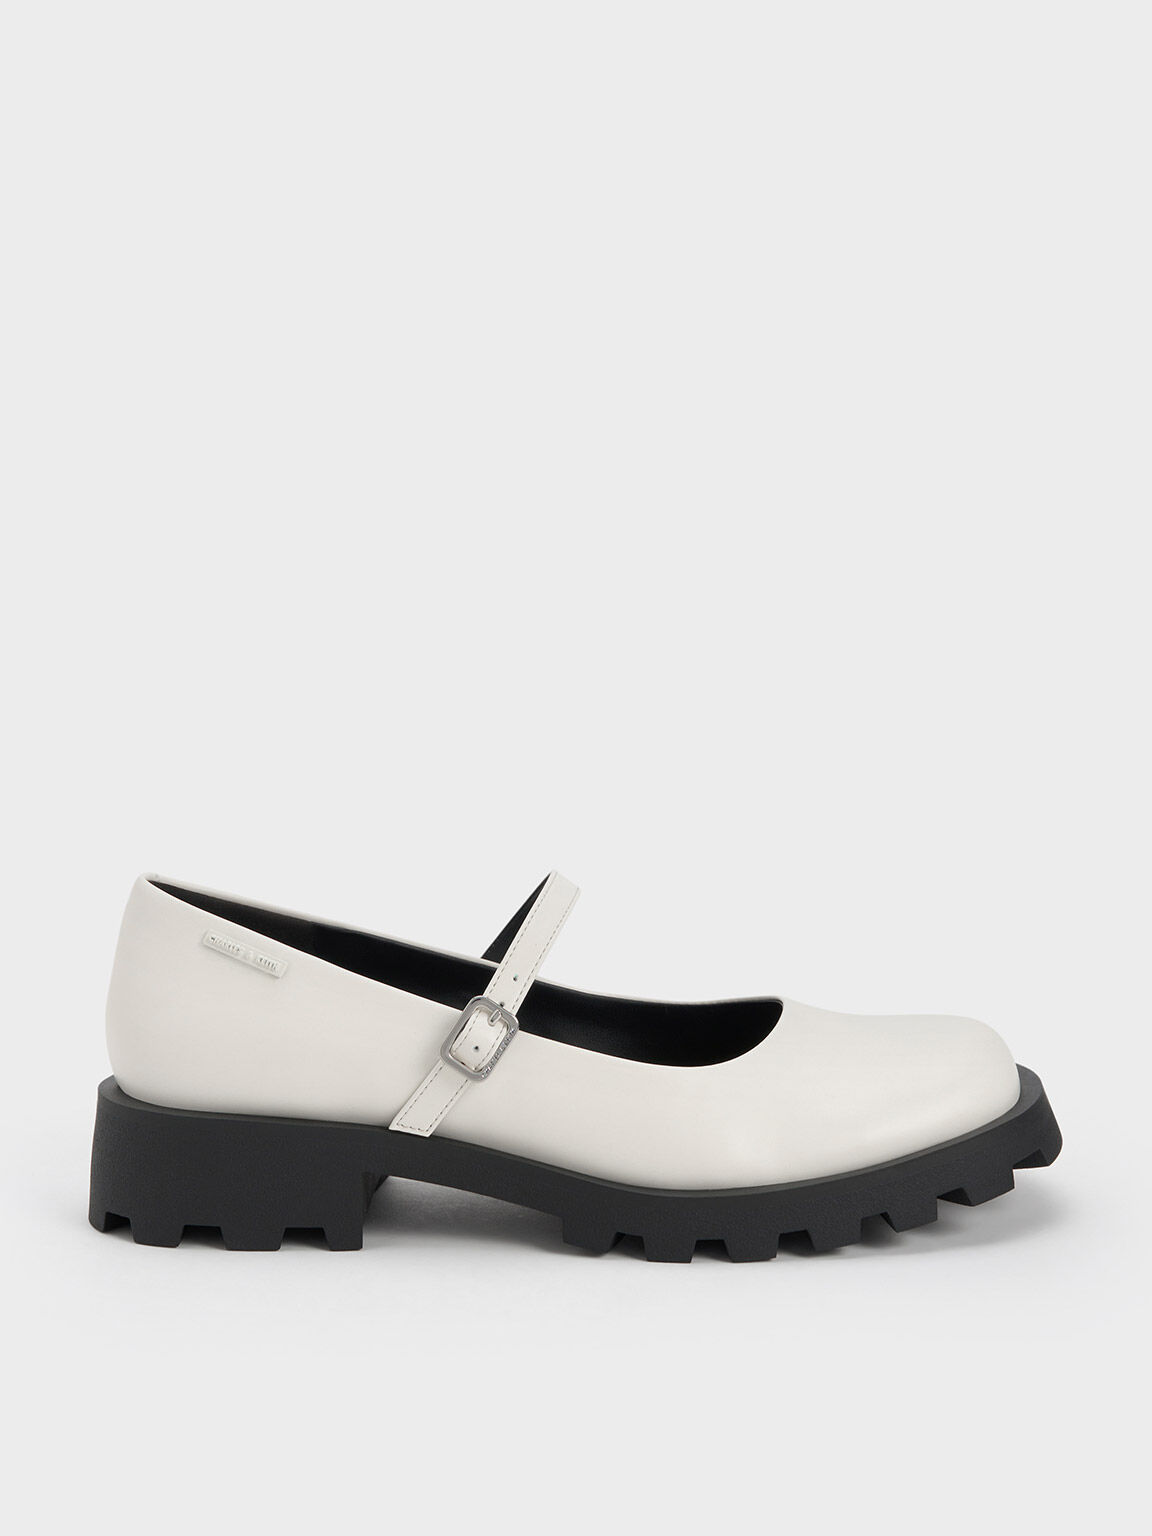 Sepatu Mary Janes Rounded Square-Toe, White, hi-res